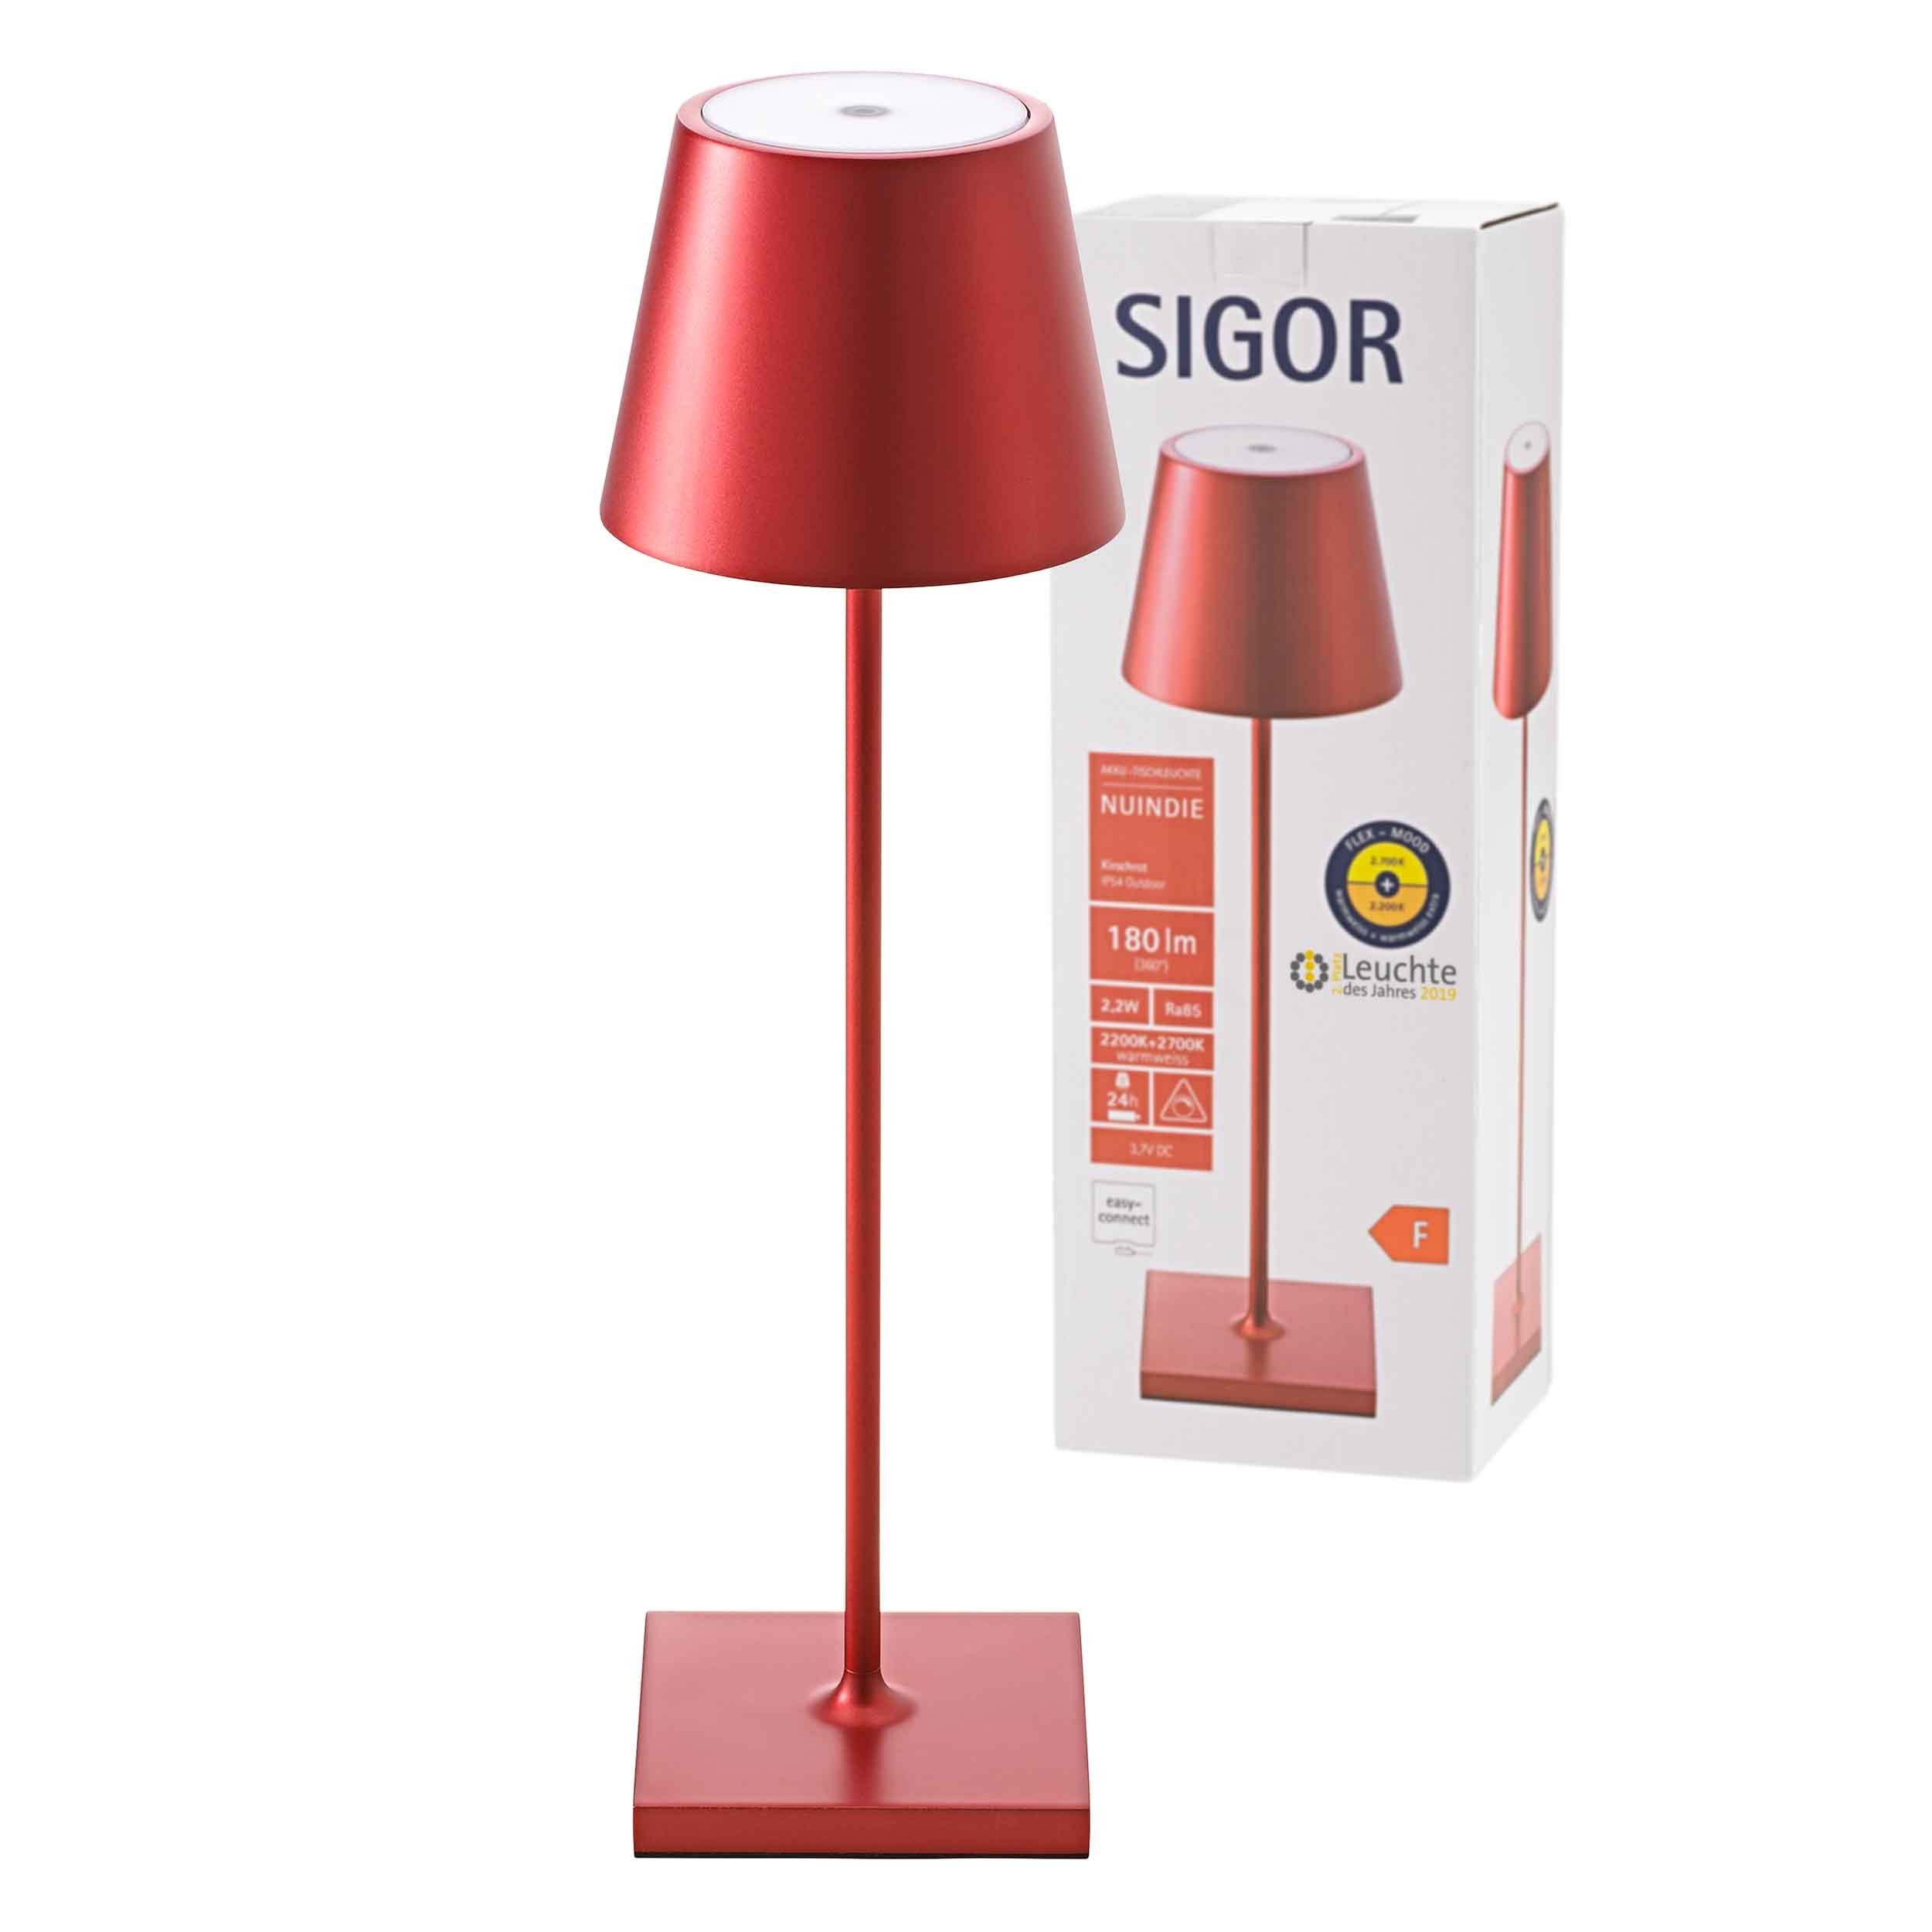 SIGOR Nuindie eloxiert LED Tischleuchte SIGOR Kirschrot Tischleuchte LED IP54 Akku-Tischleuchte